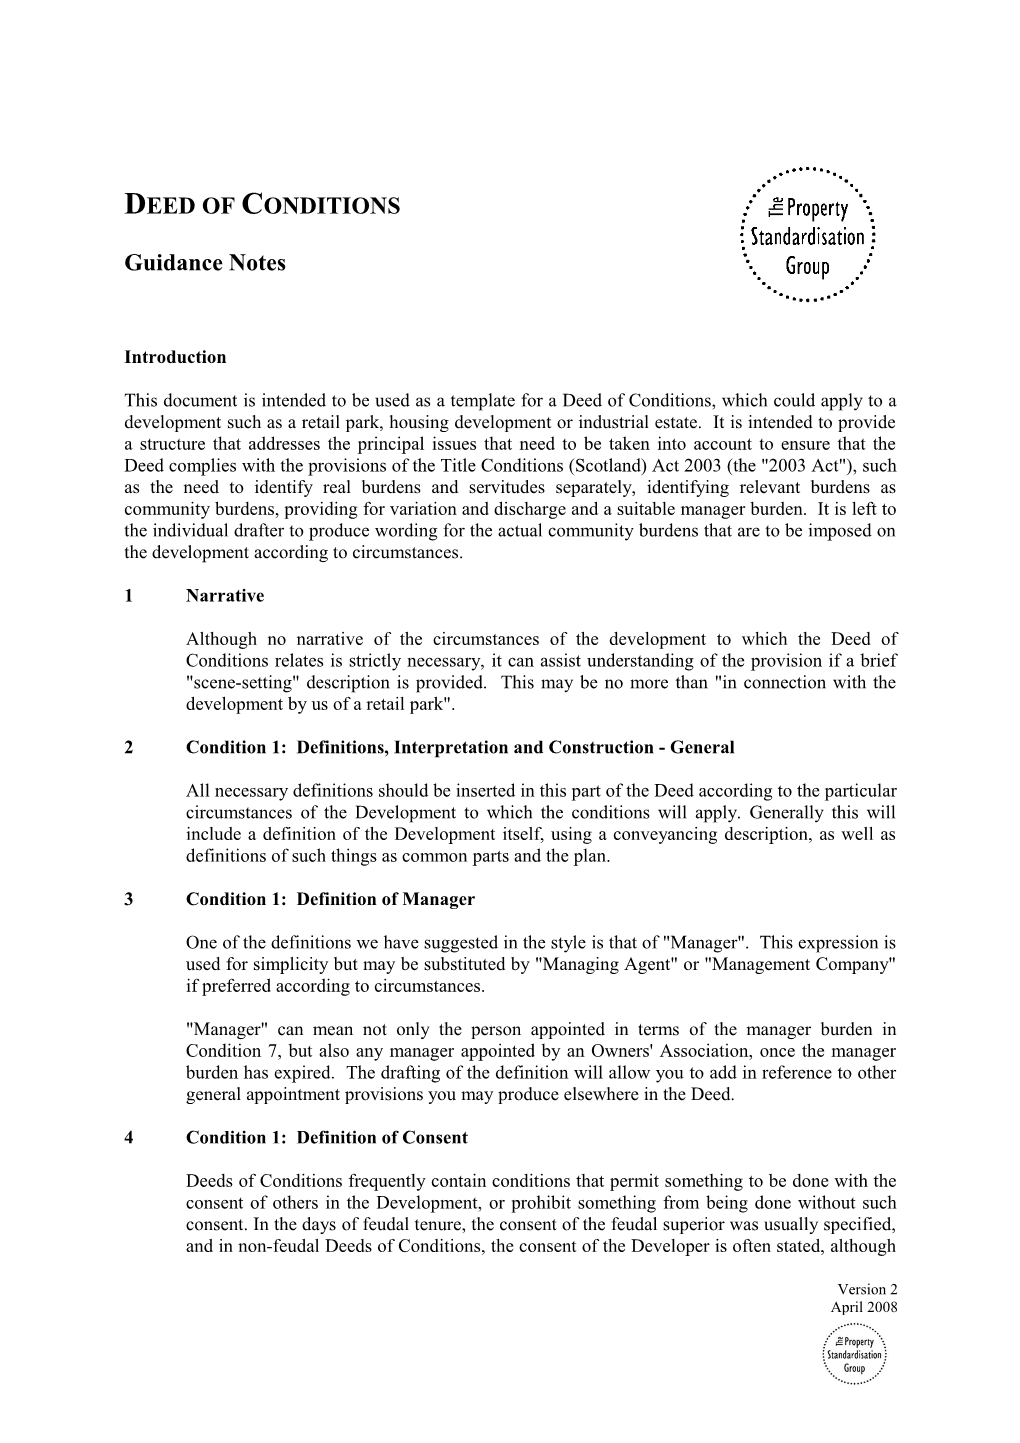 2Condition 1: Definitions, Interpretation and Construction - General